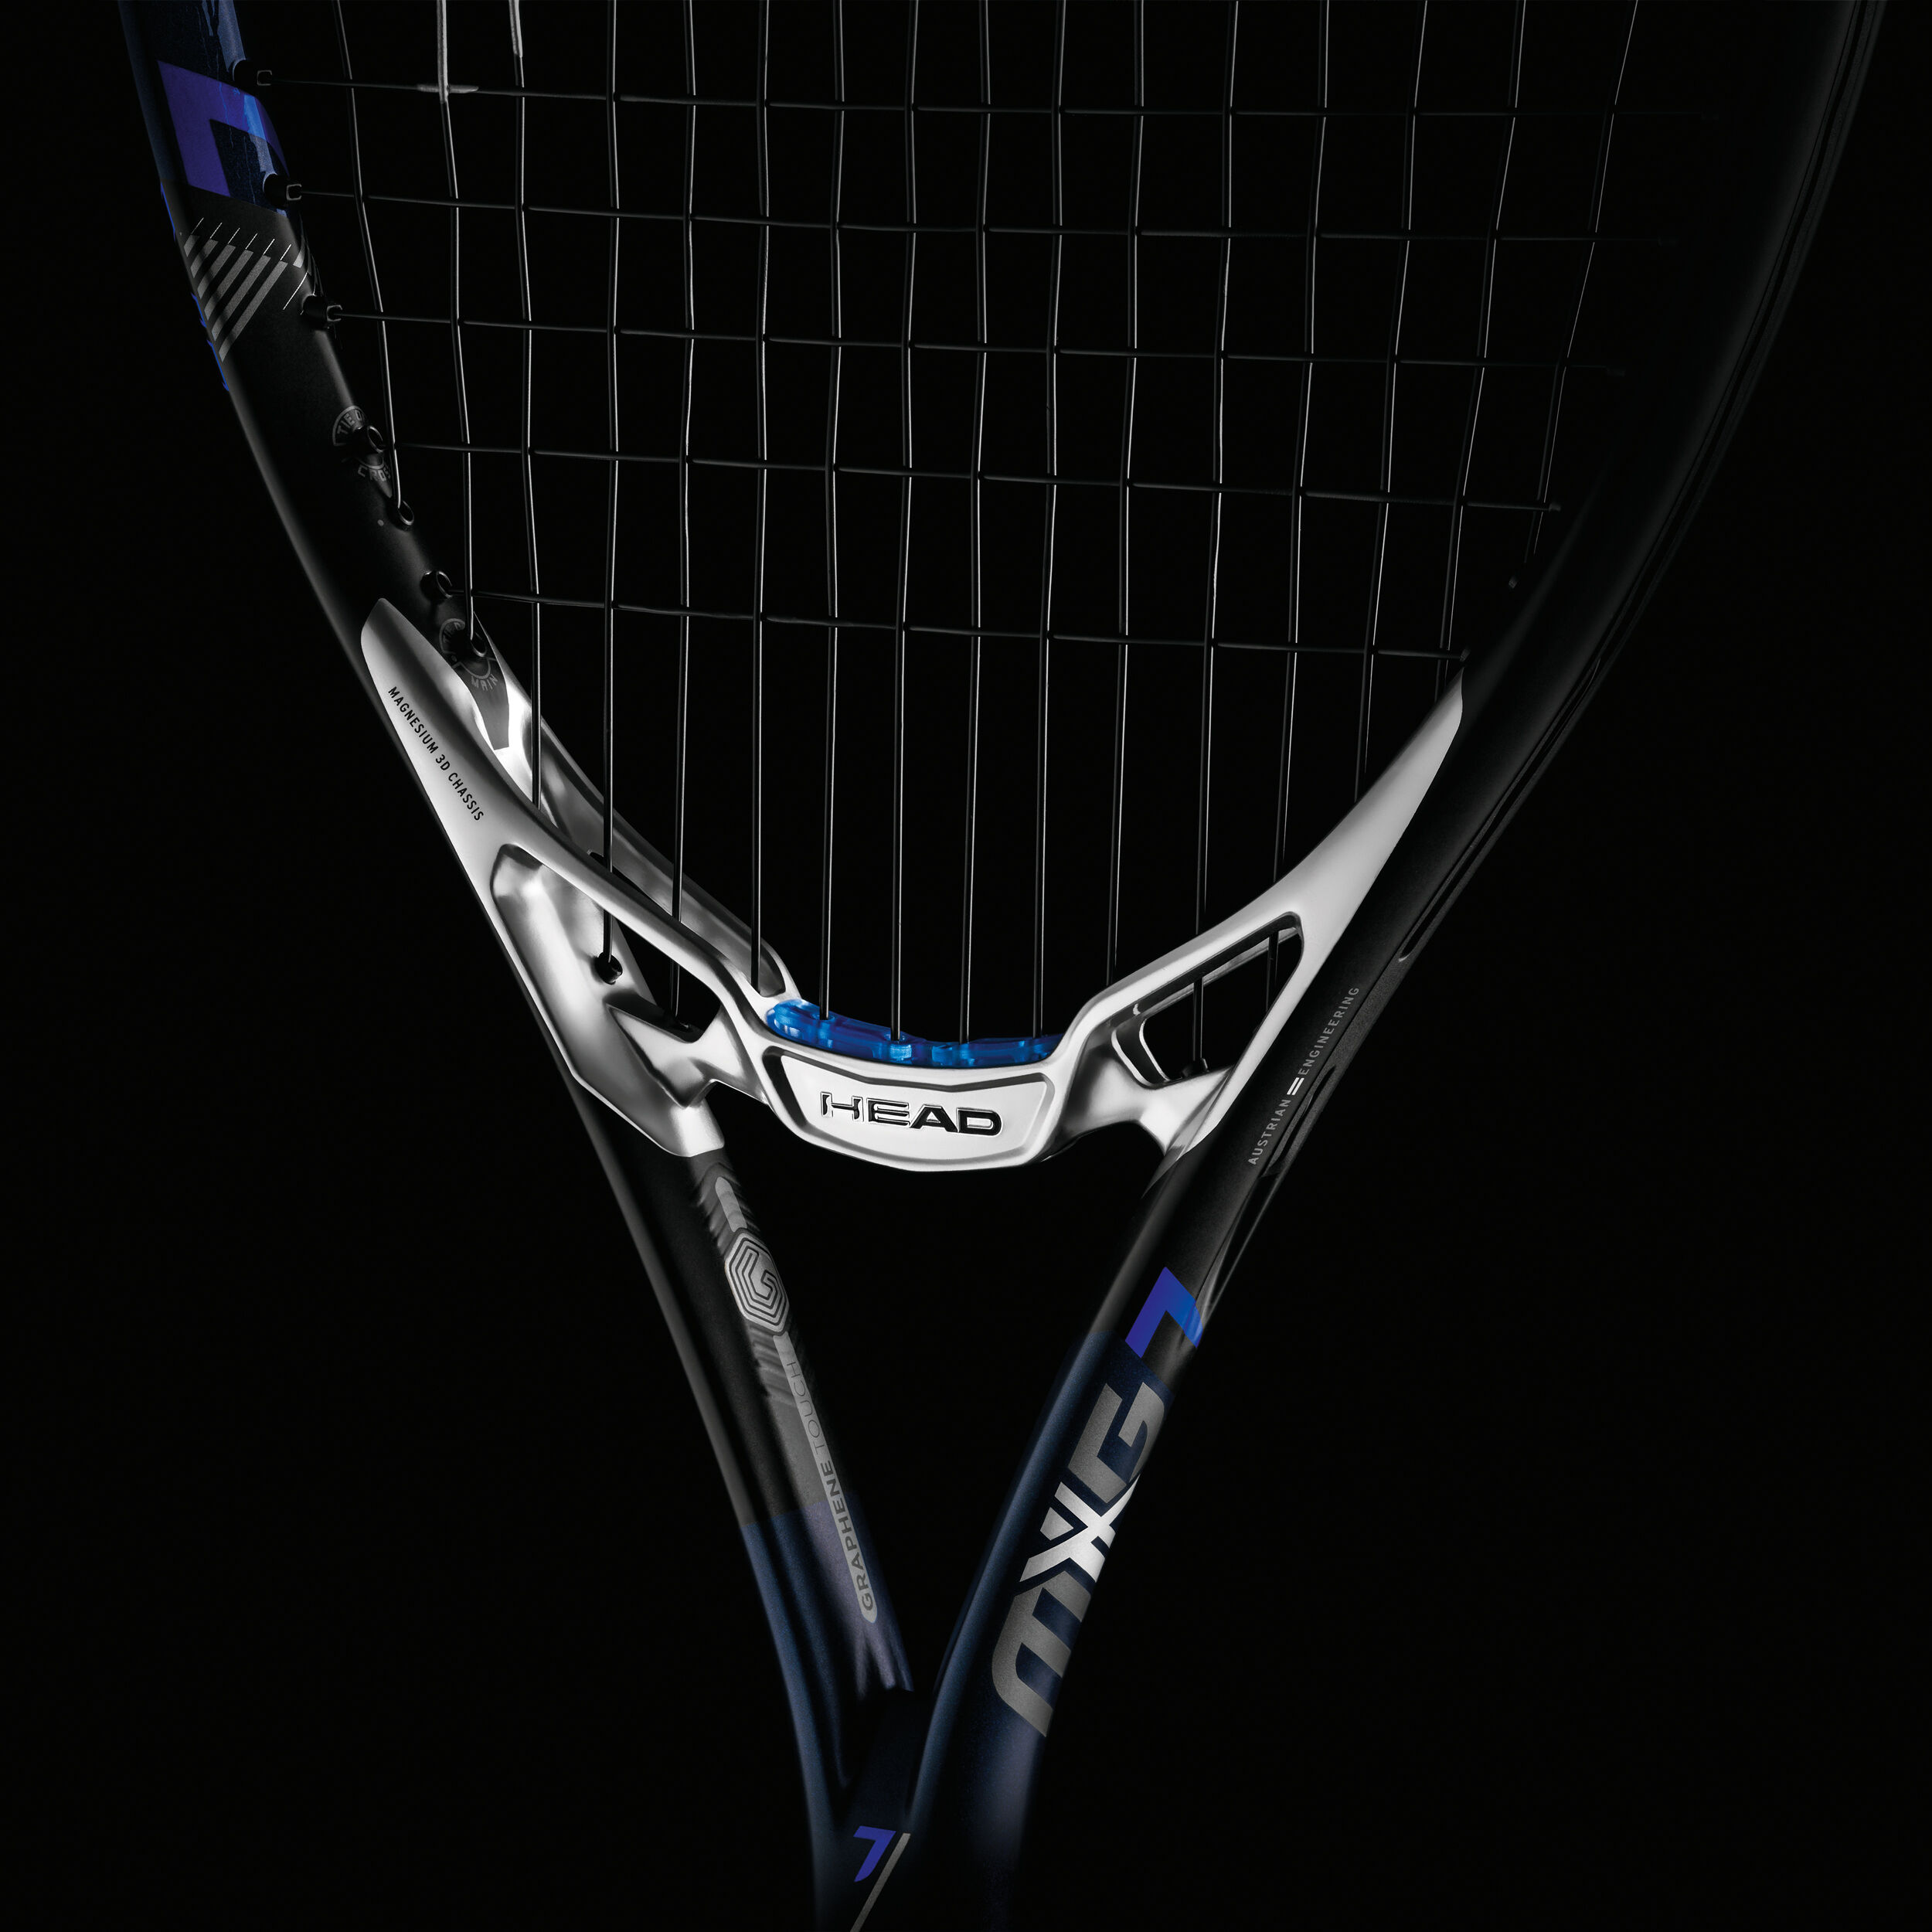 Head MxG 7 Tennis Racquet Racket Authorized Dealer w/ 1-Year Warranty 